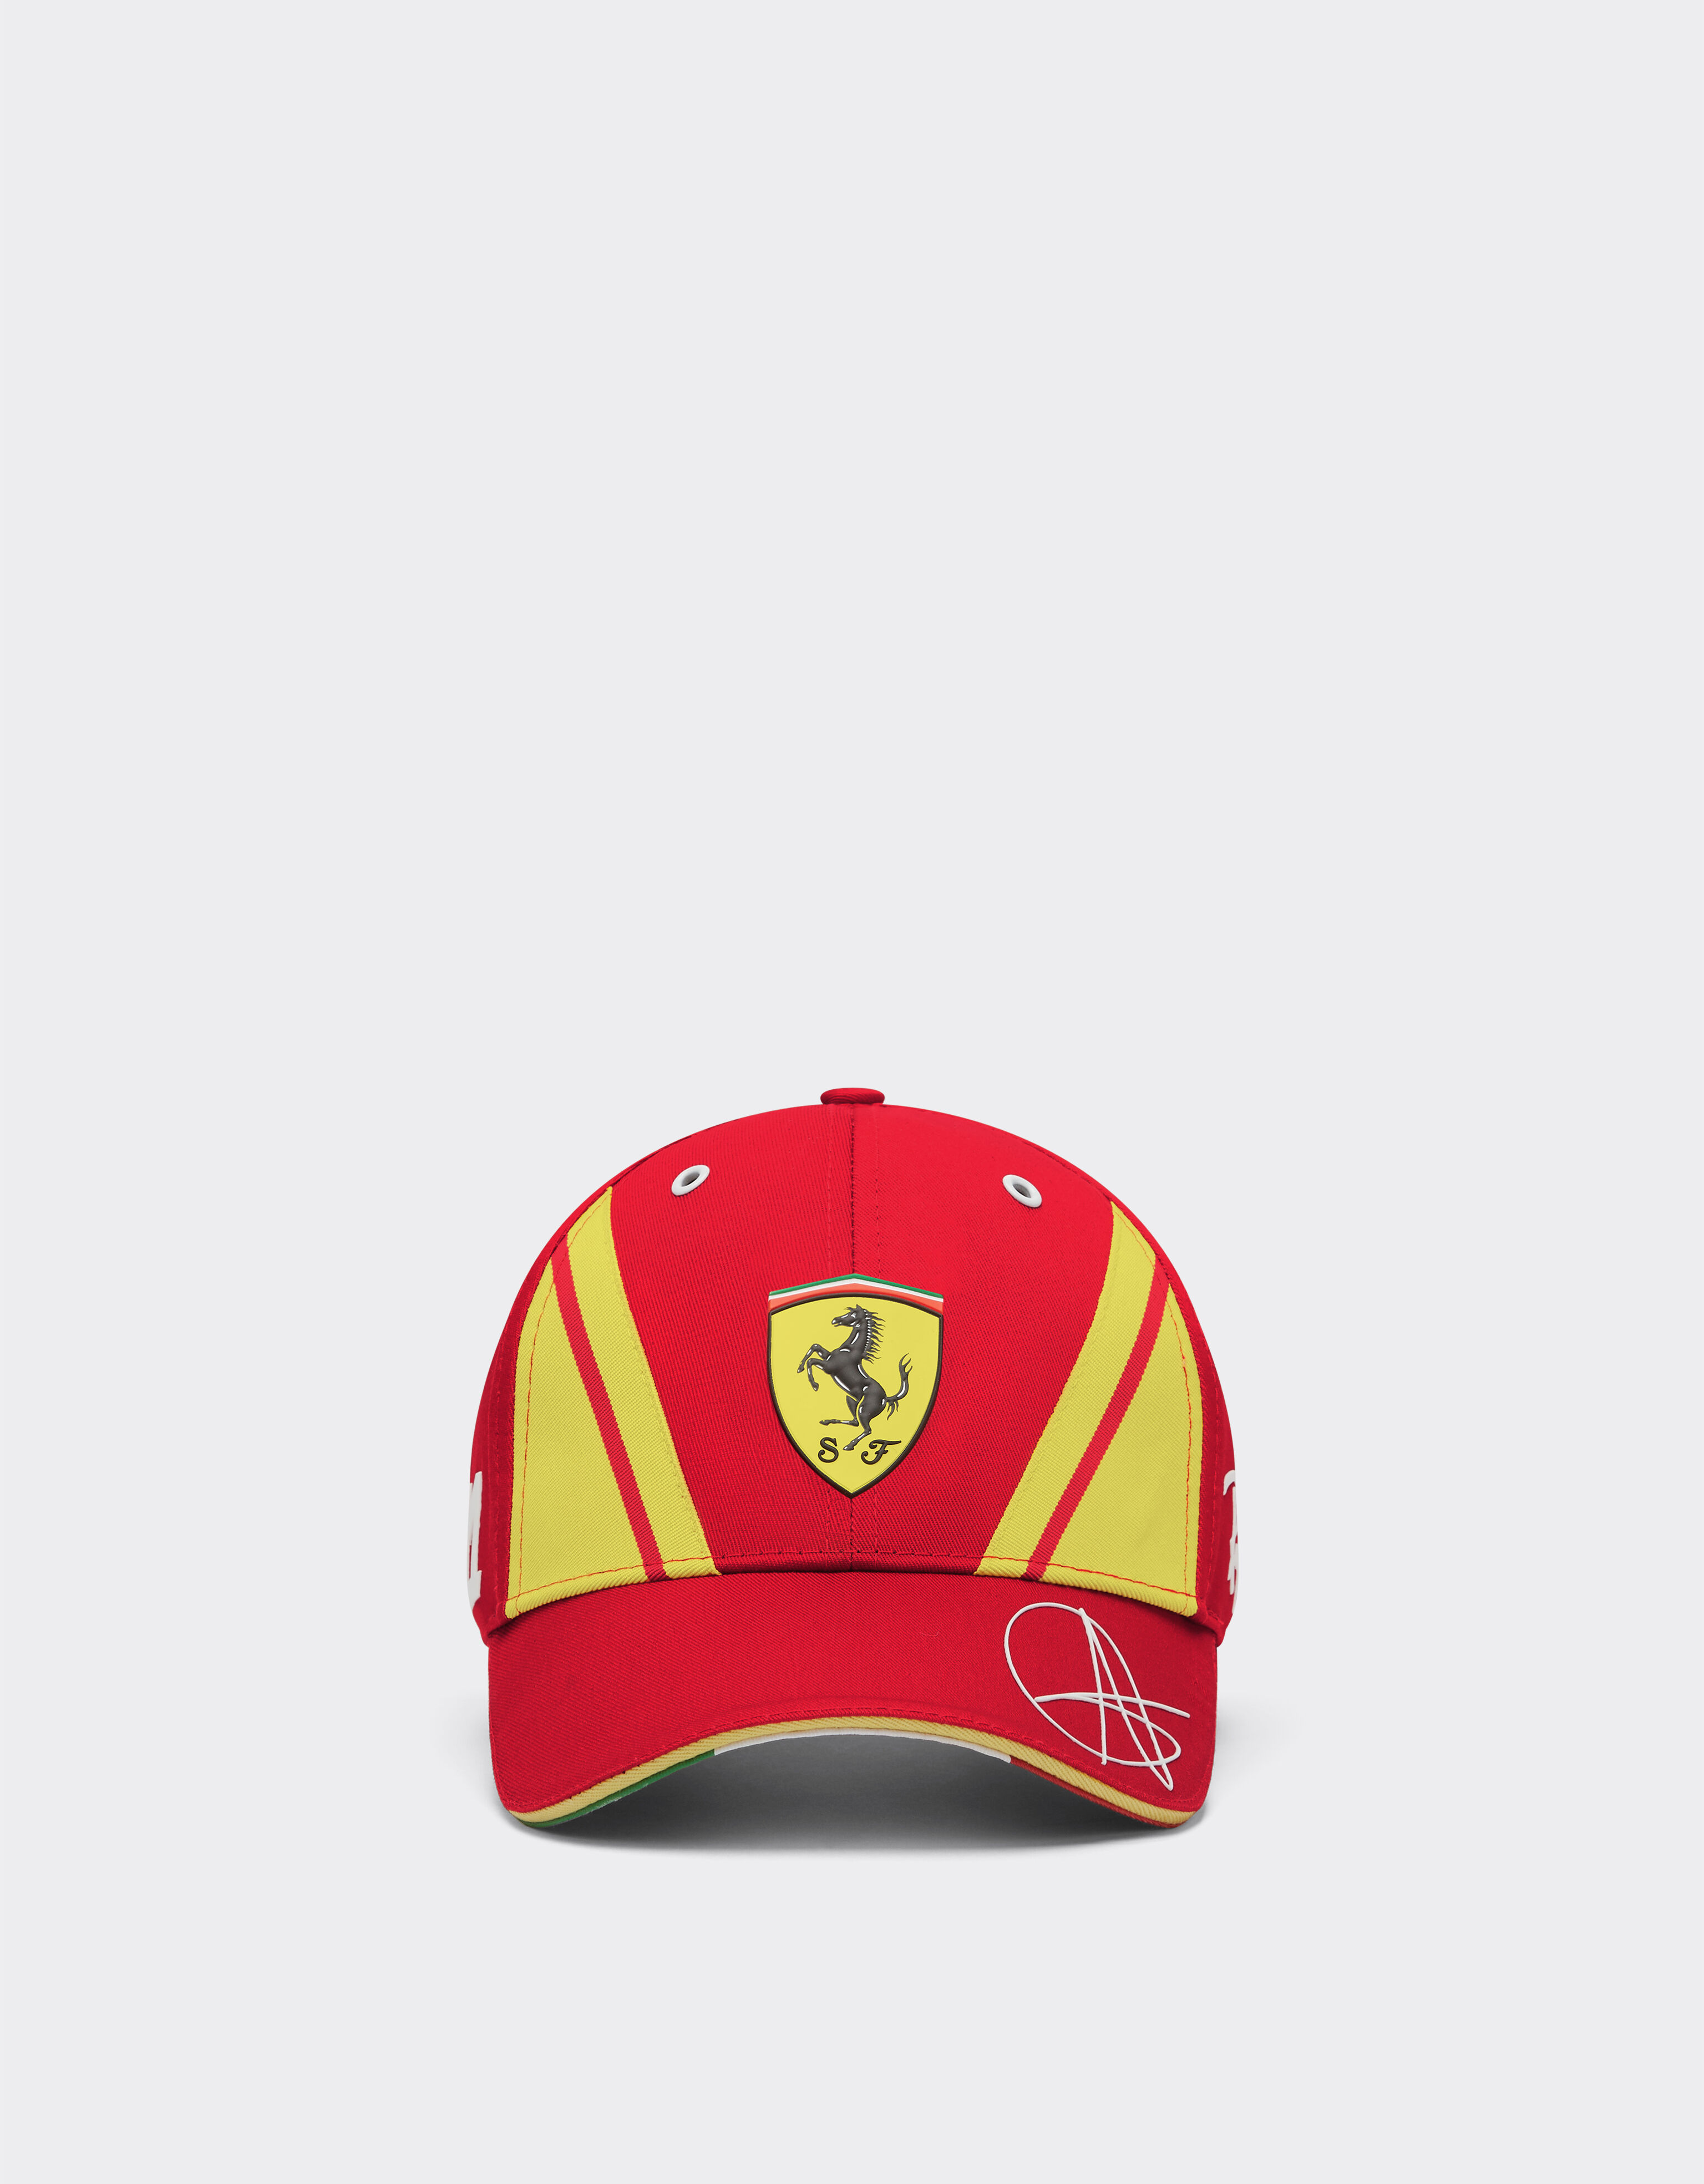 ${brand} Giovinazzi Ferrari Hypercar Baseballcap - Limited Edition ${colorDescription} ${masterID}